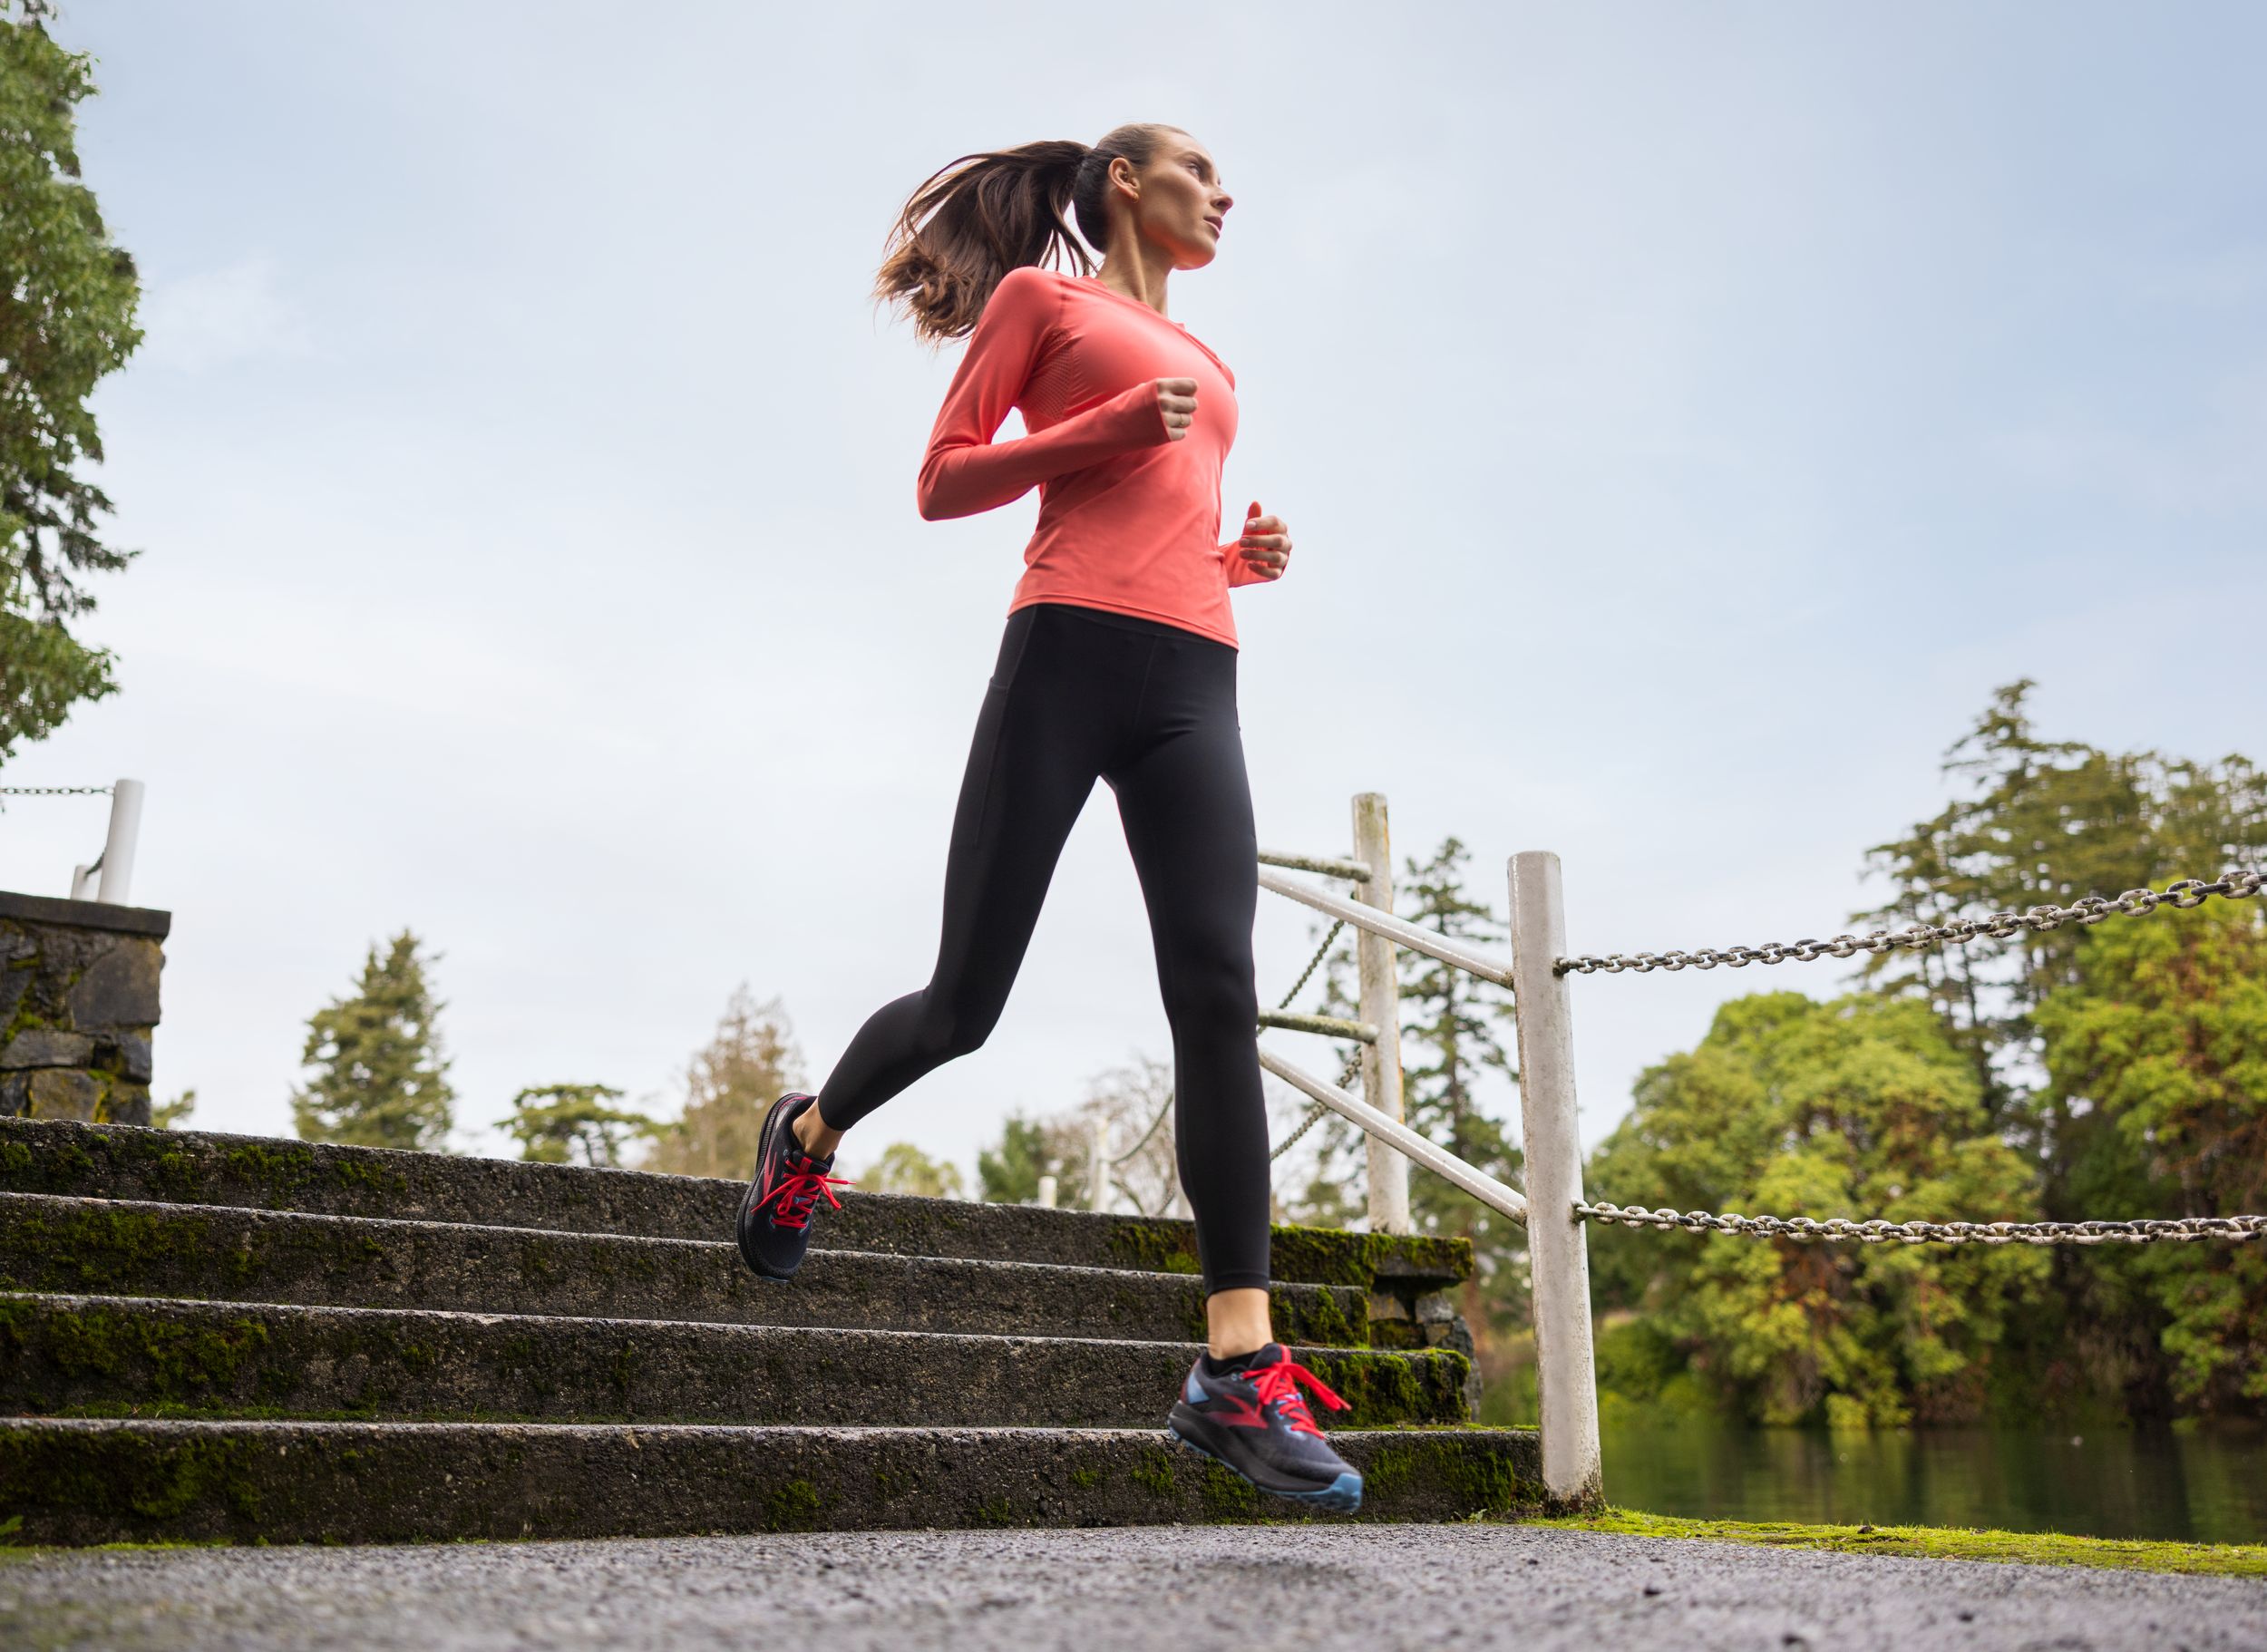 Nike Epic Run Power 7/8 Women's Floral Printed Tights Running Training Gym